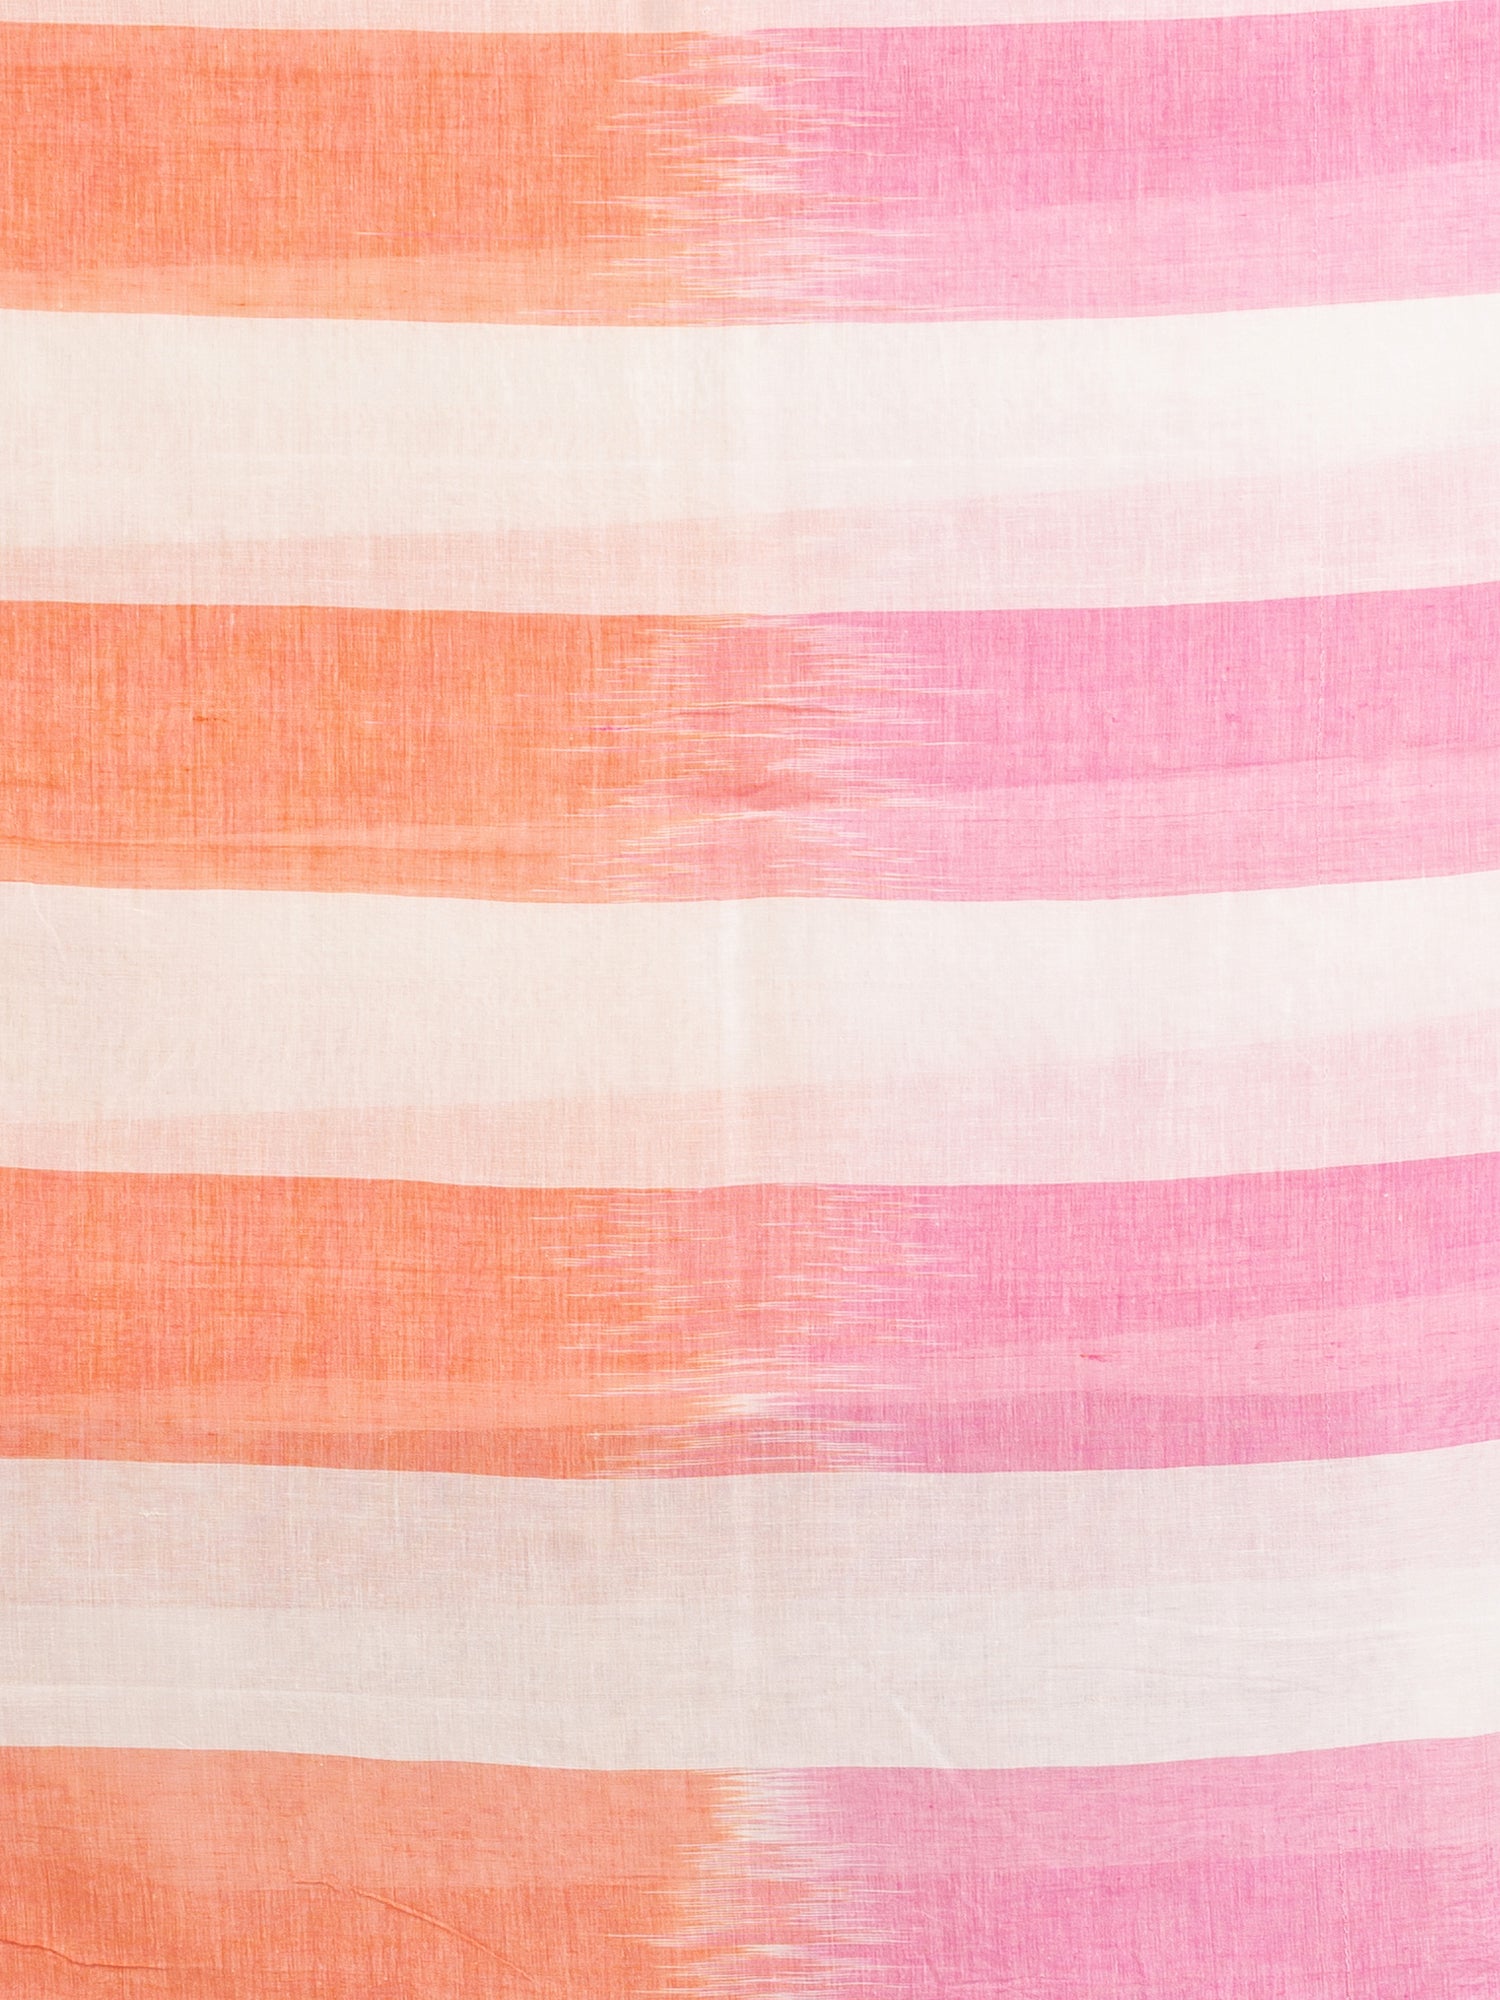 Women's White pink And Orange Stipe Cotton handloom Saree - Angoshobha